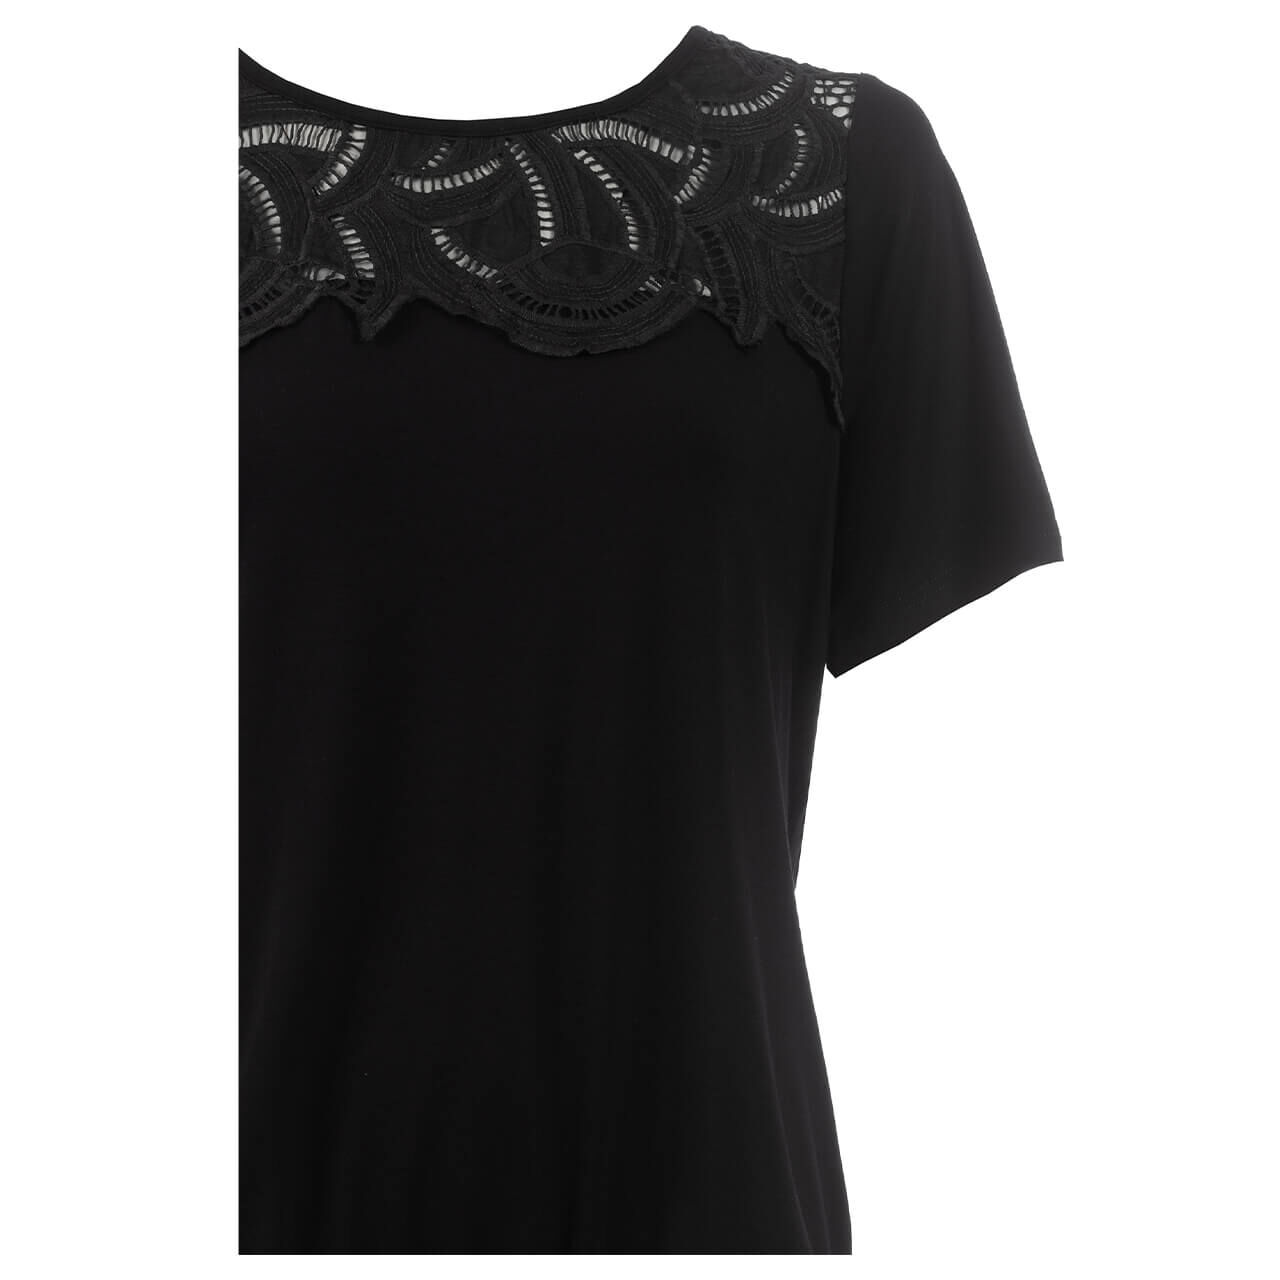 Soquesto Damen T-Shirt black lace